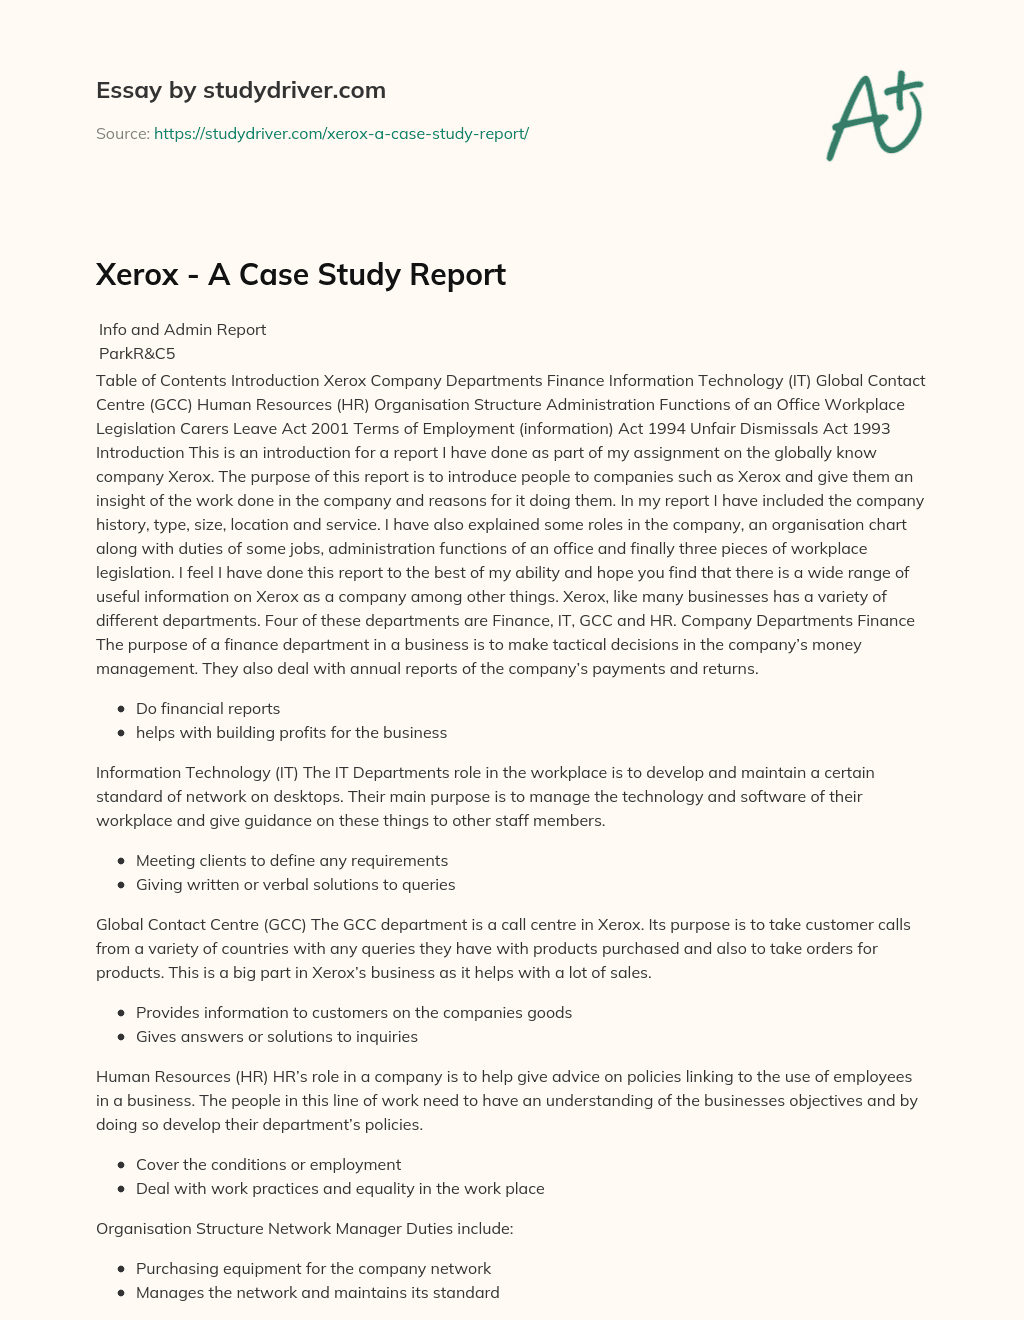 Xerox – a Case Study Report essay